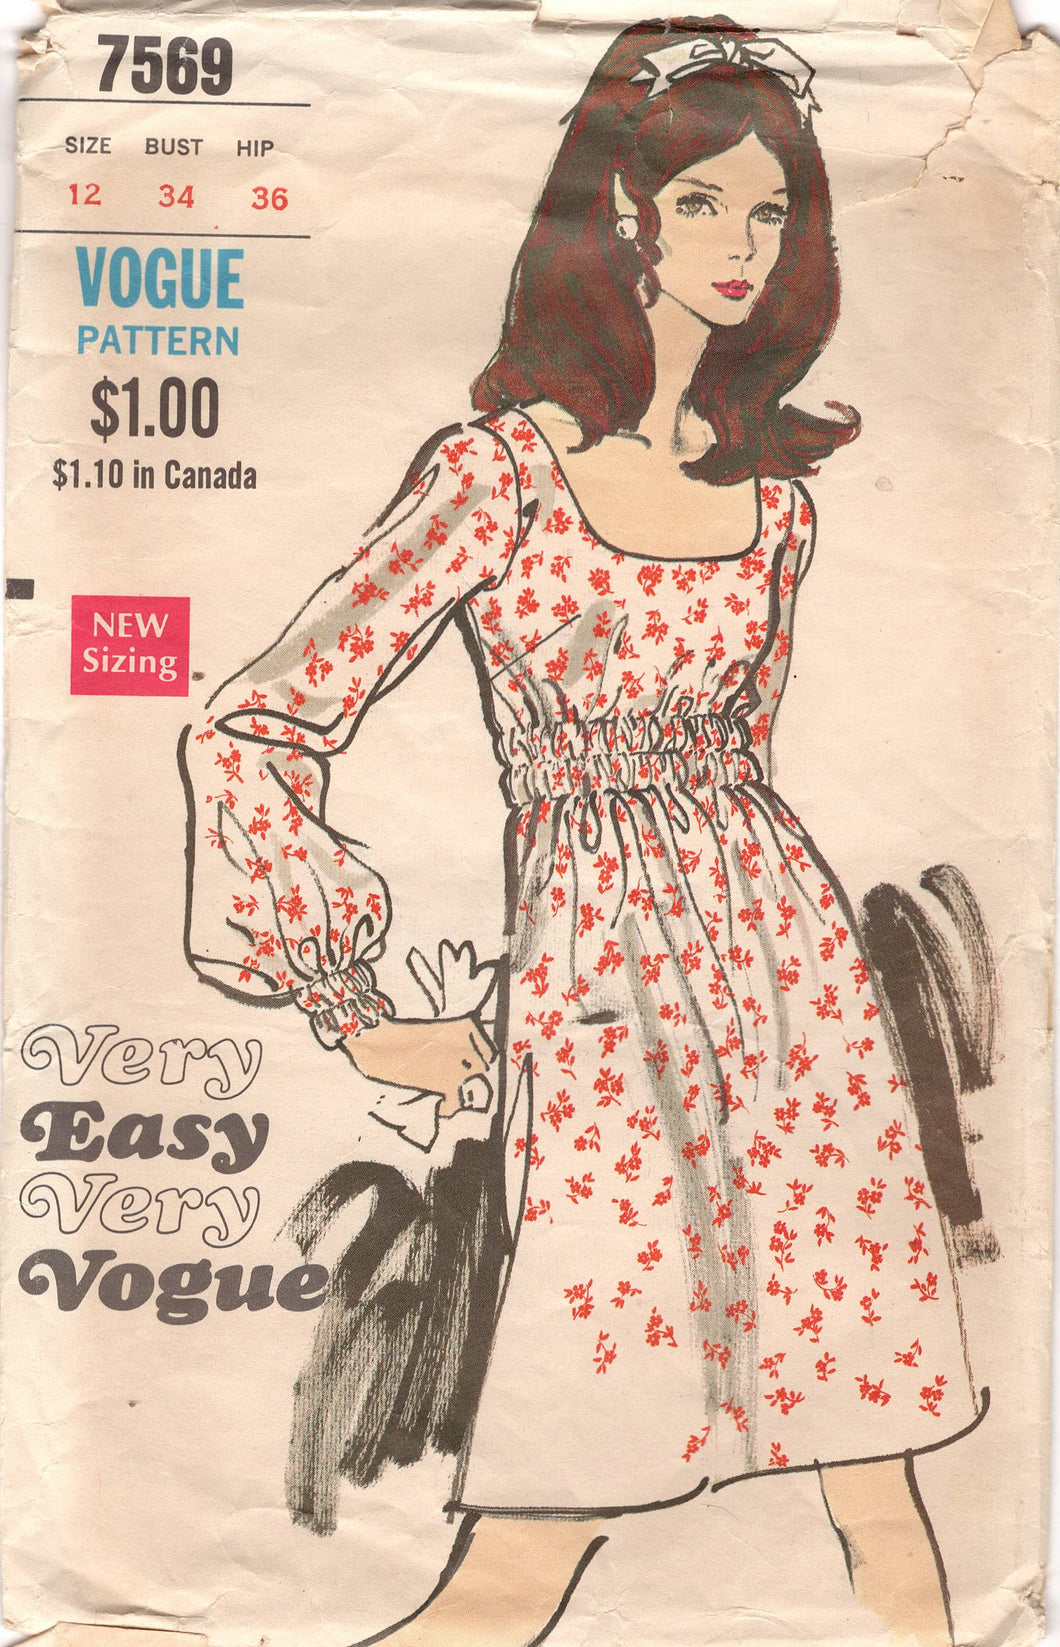 1970's Vogue One Piece Dress Pattern with Elastic Waist and Scoop Neckline - Bust 34